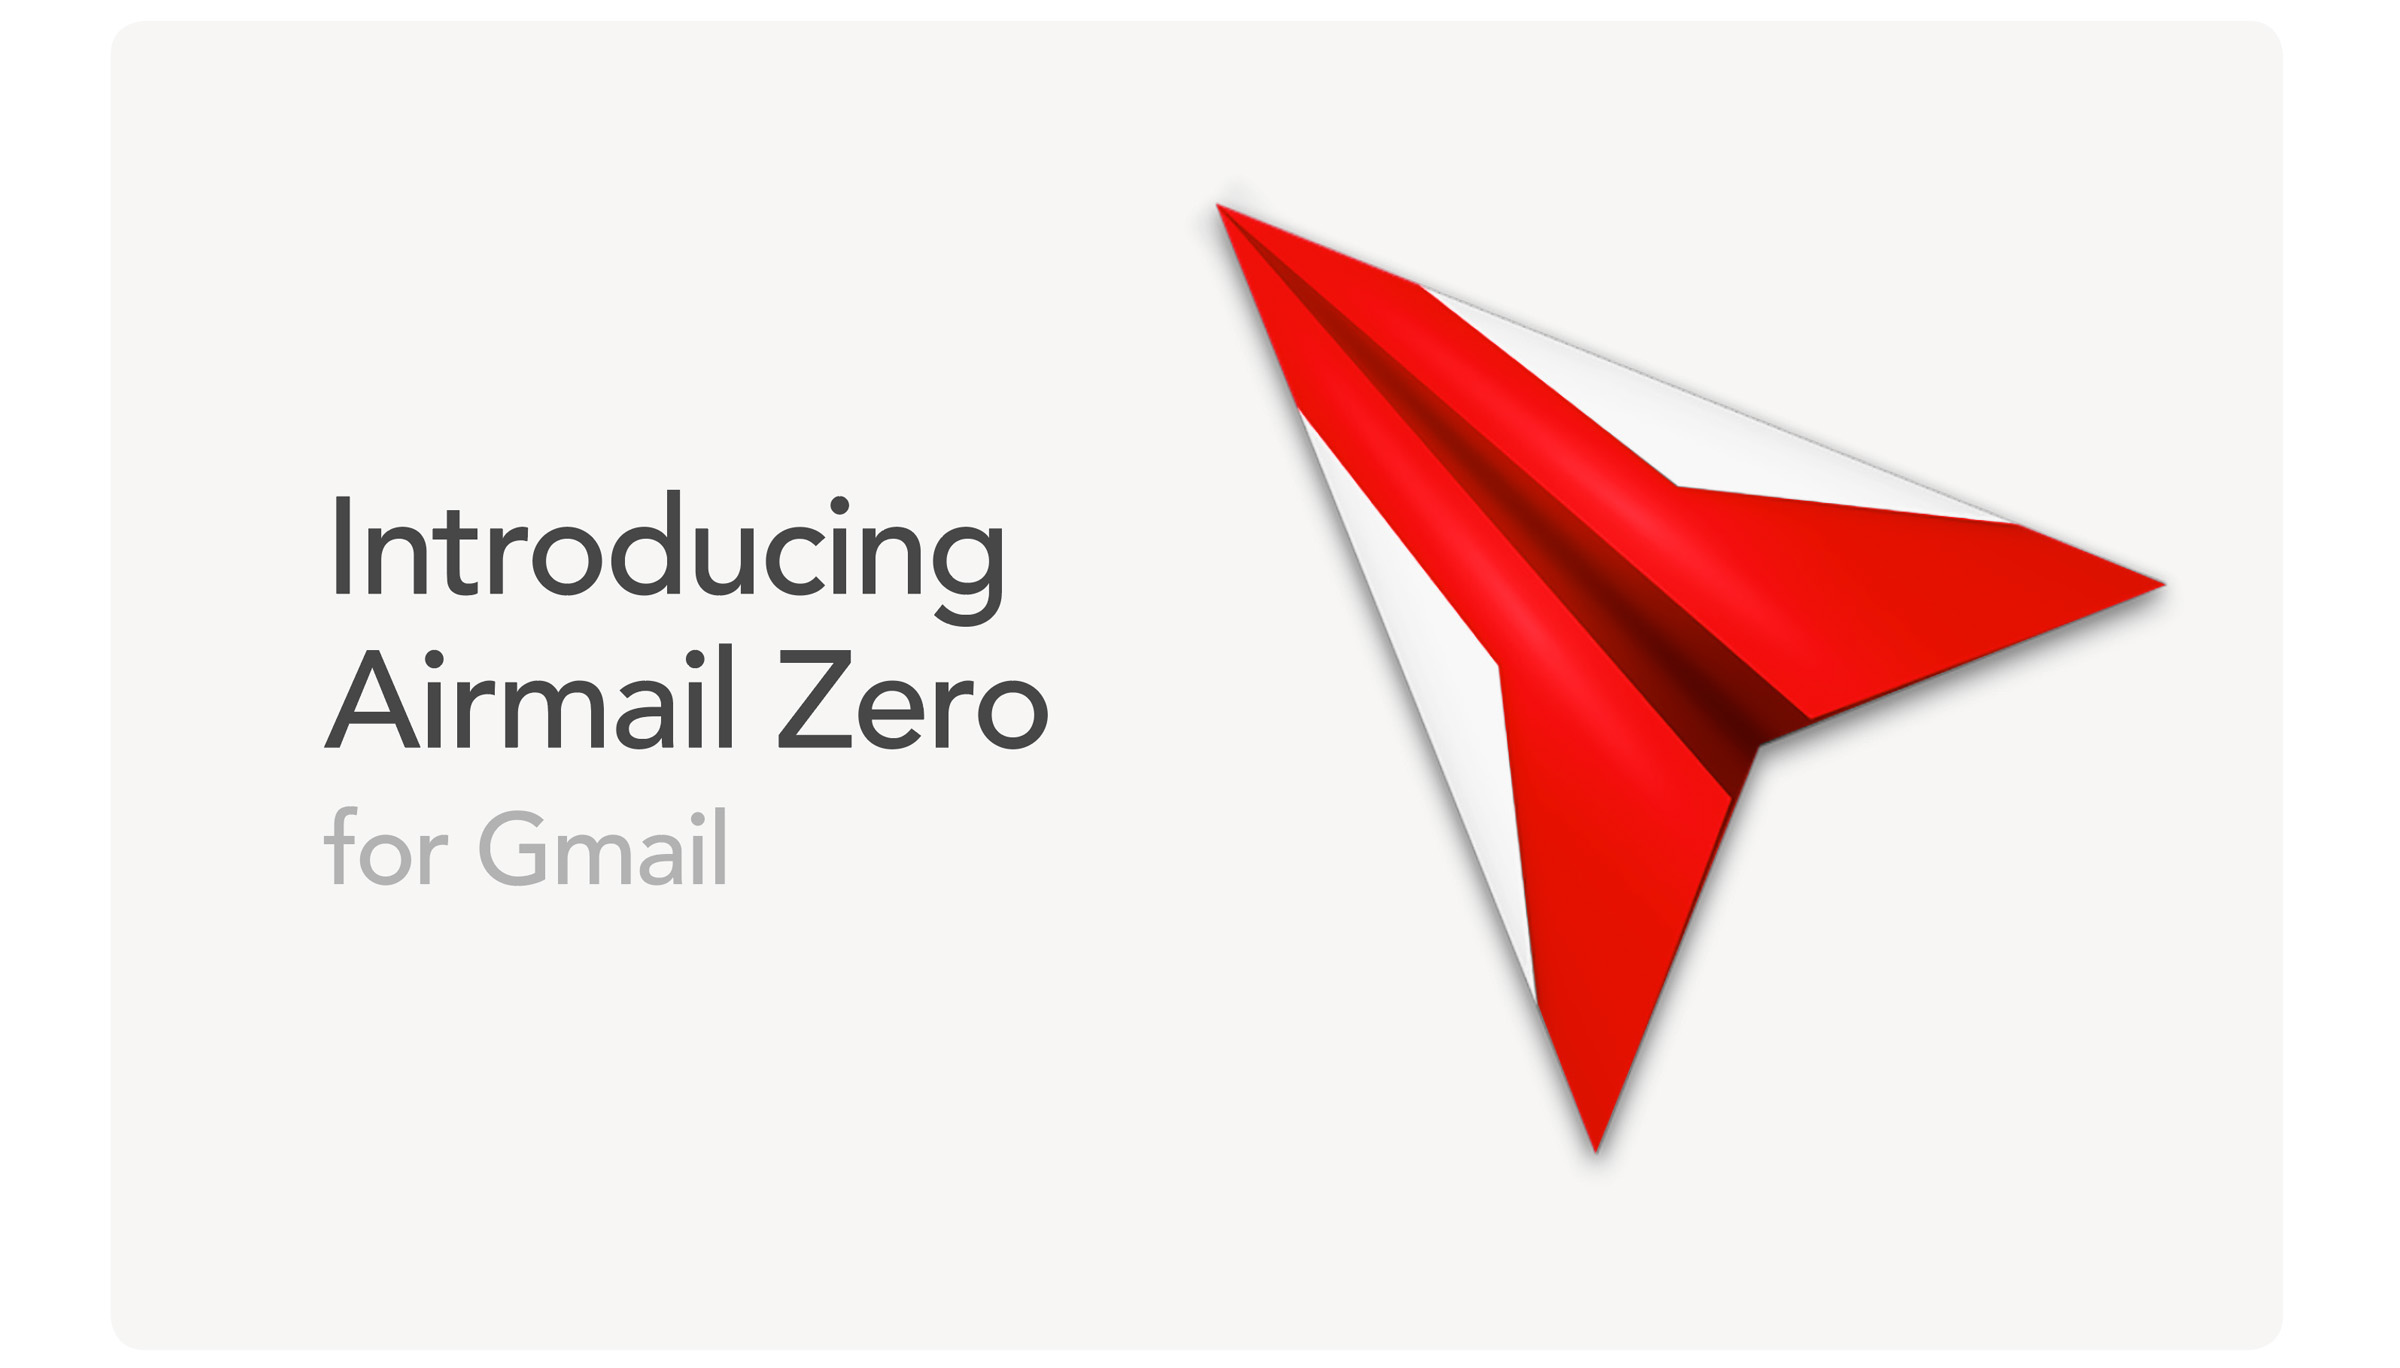 airmail app